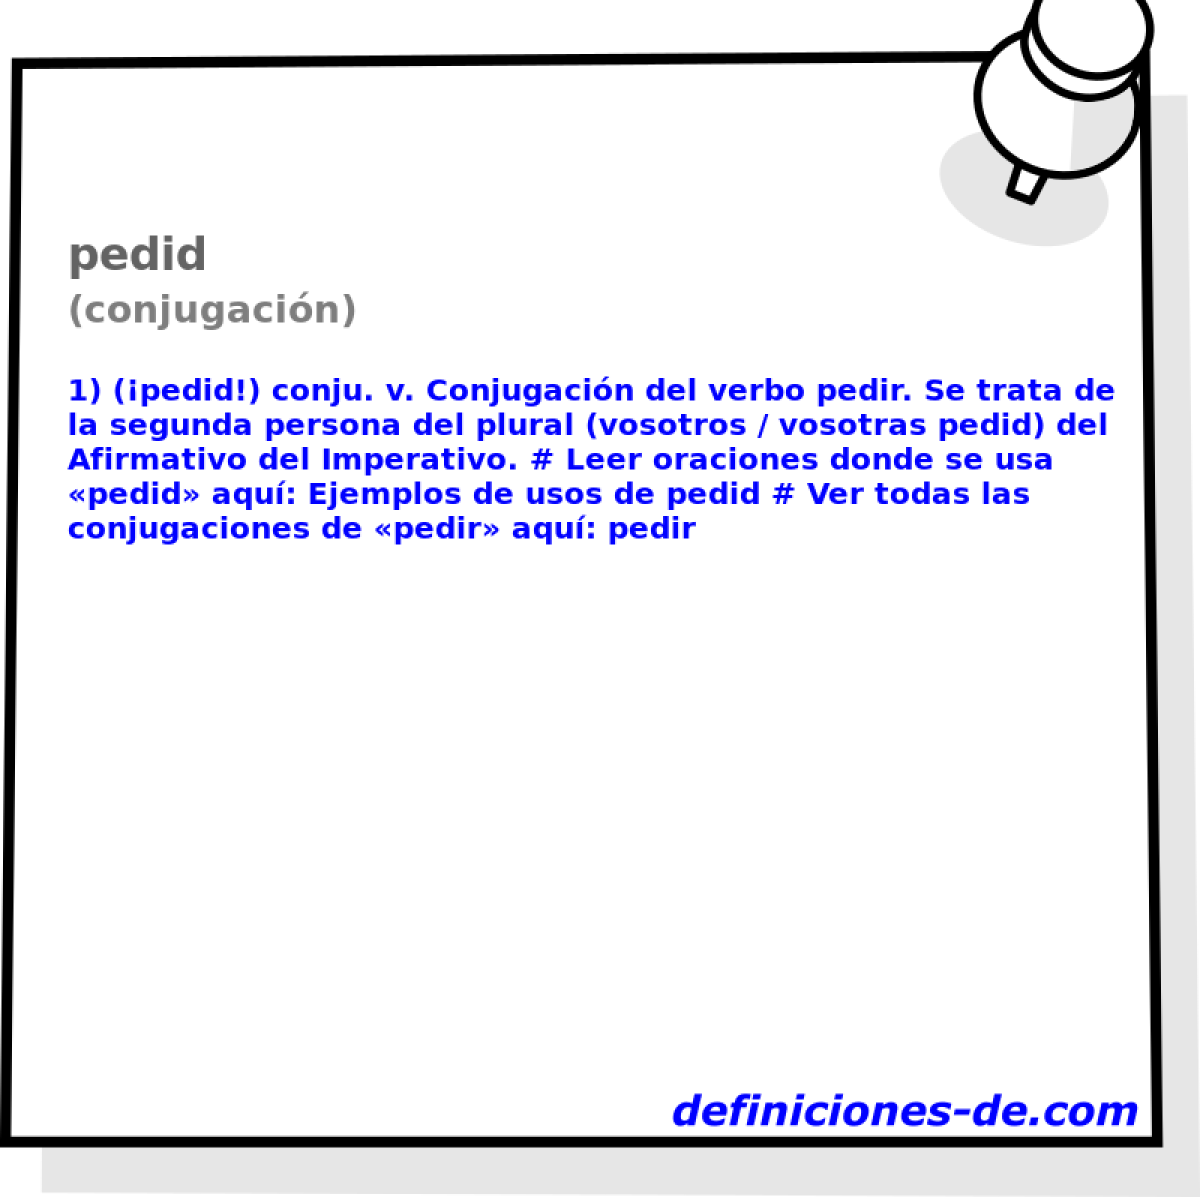 pedid (conjugacin)